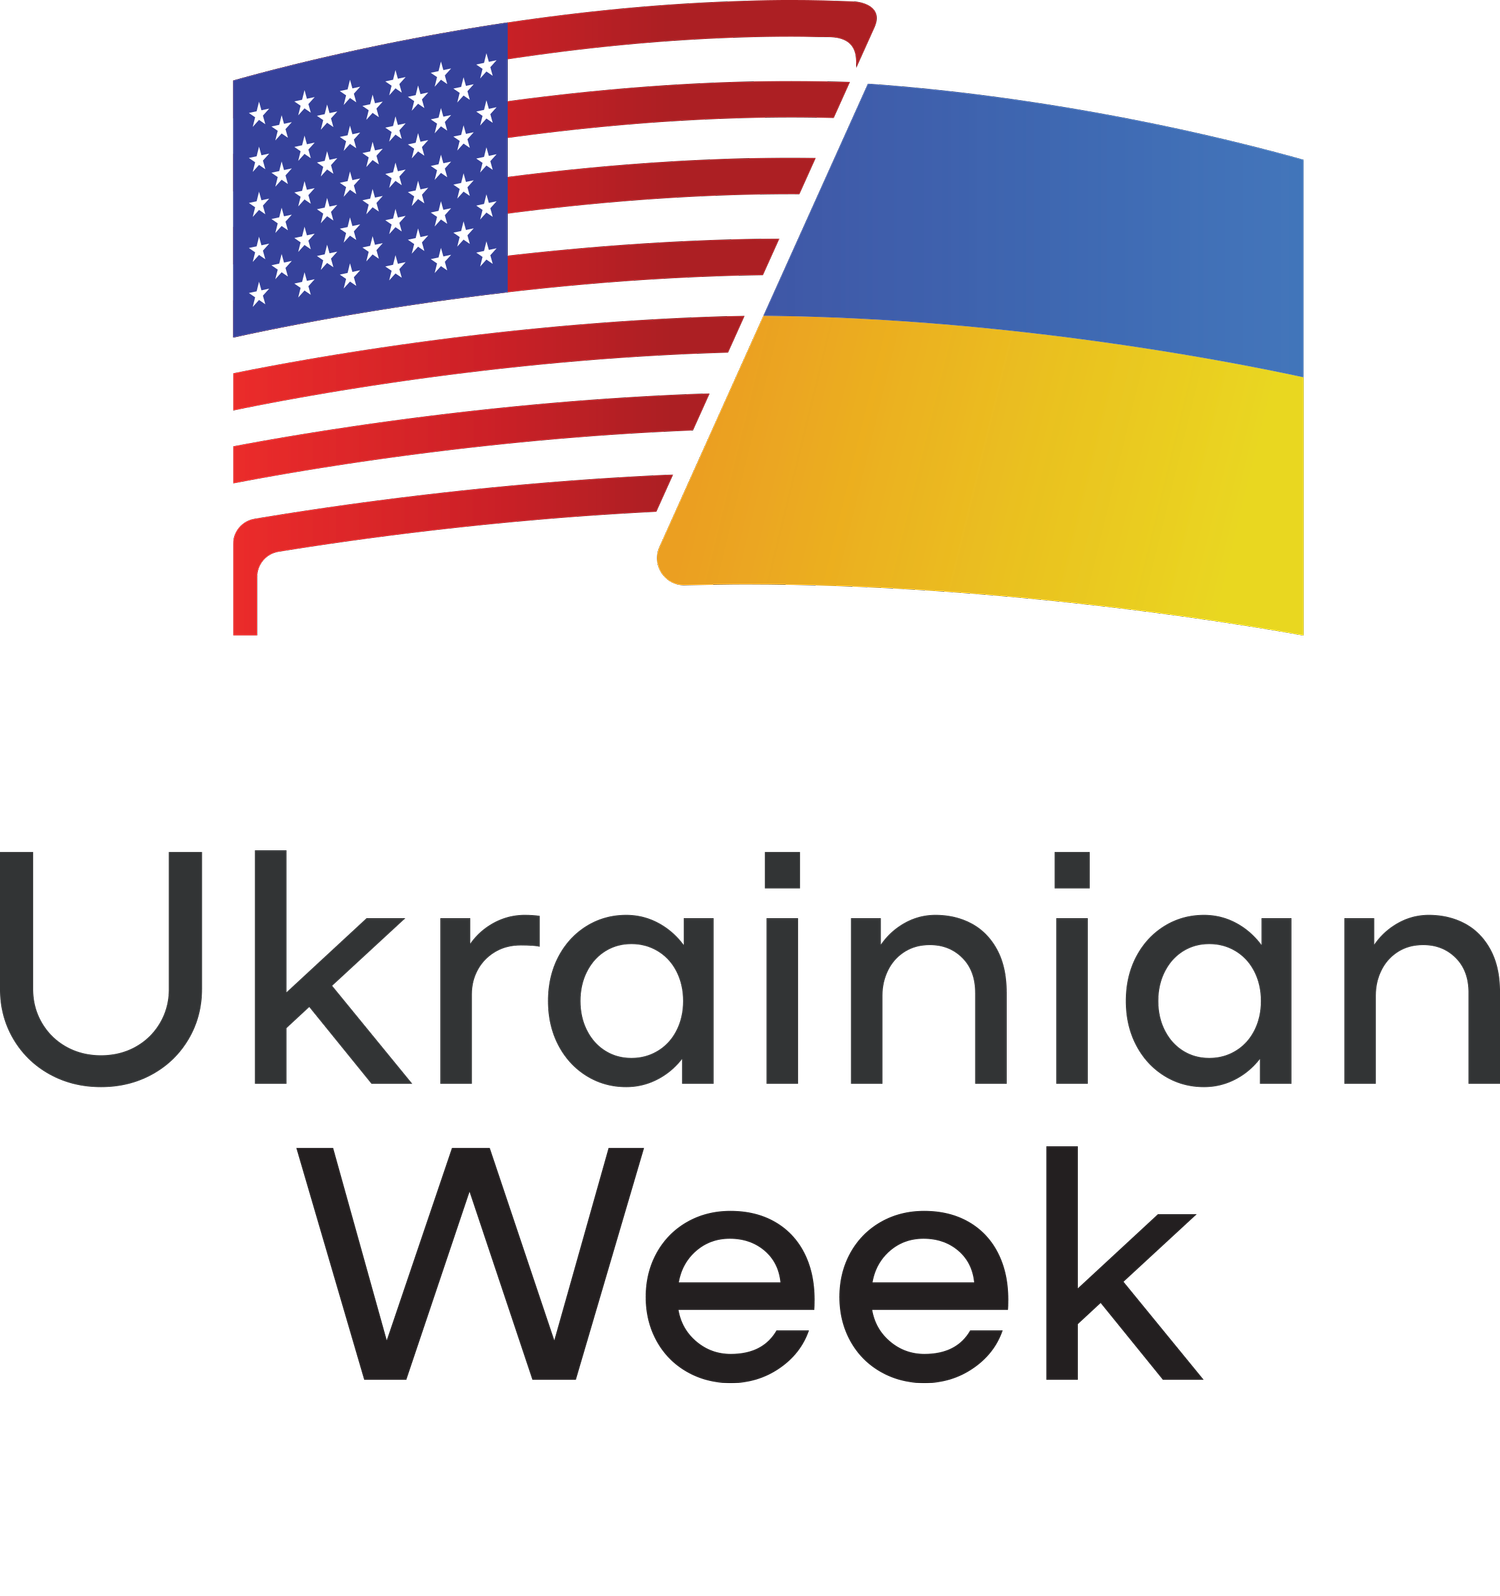 Ukrainian Week DC